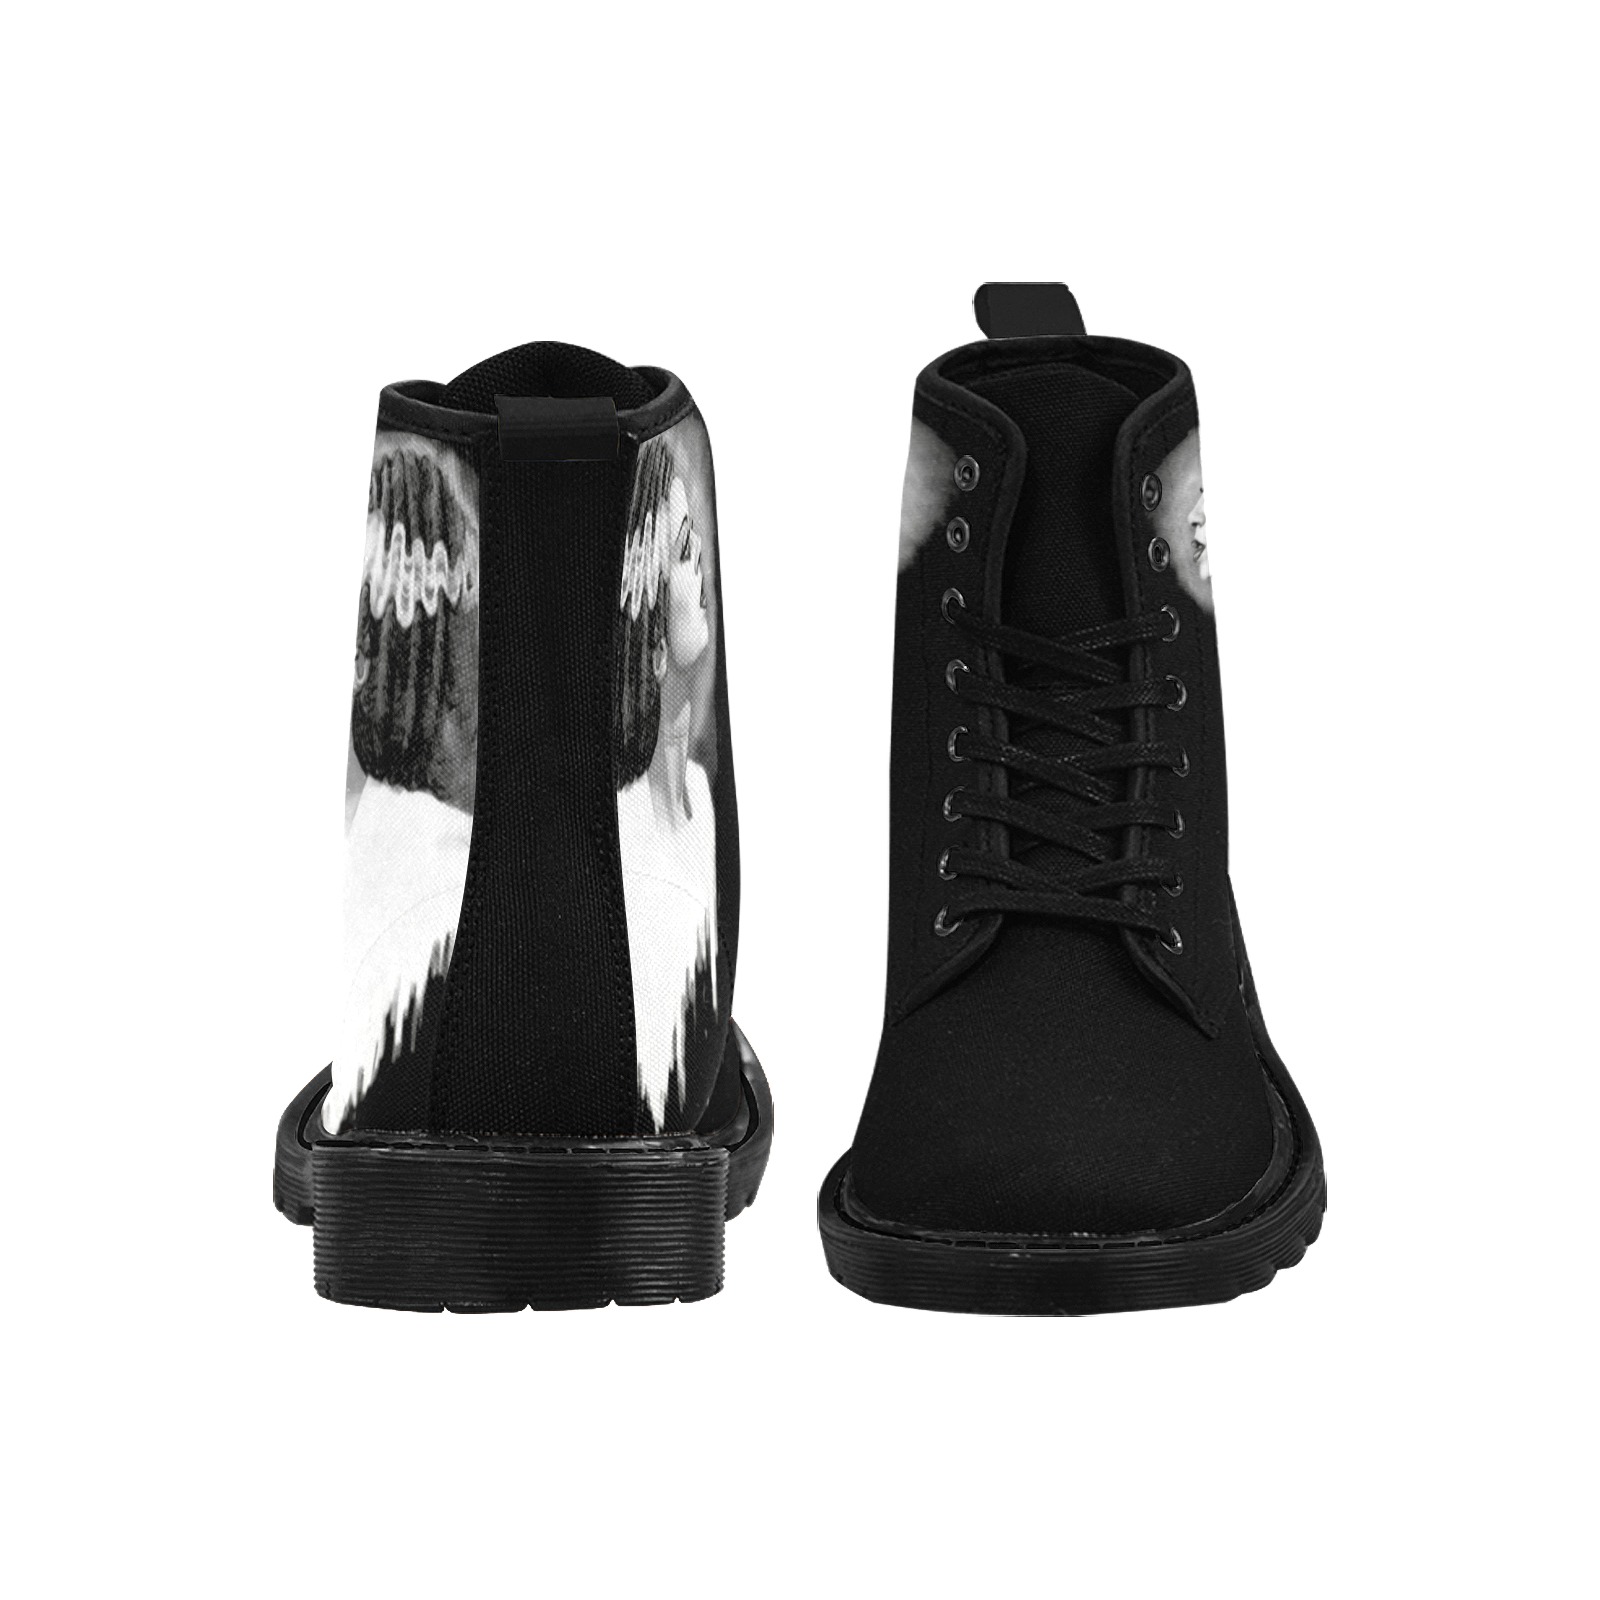 frankbride Martin Boots for Women (Black) (Model 1203H)